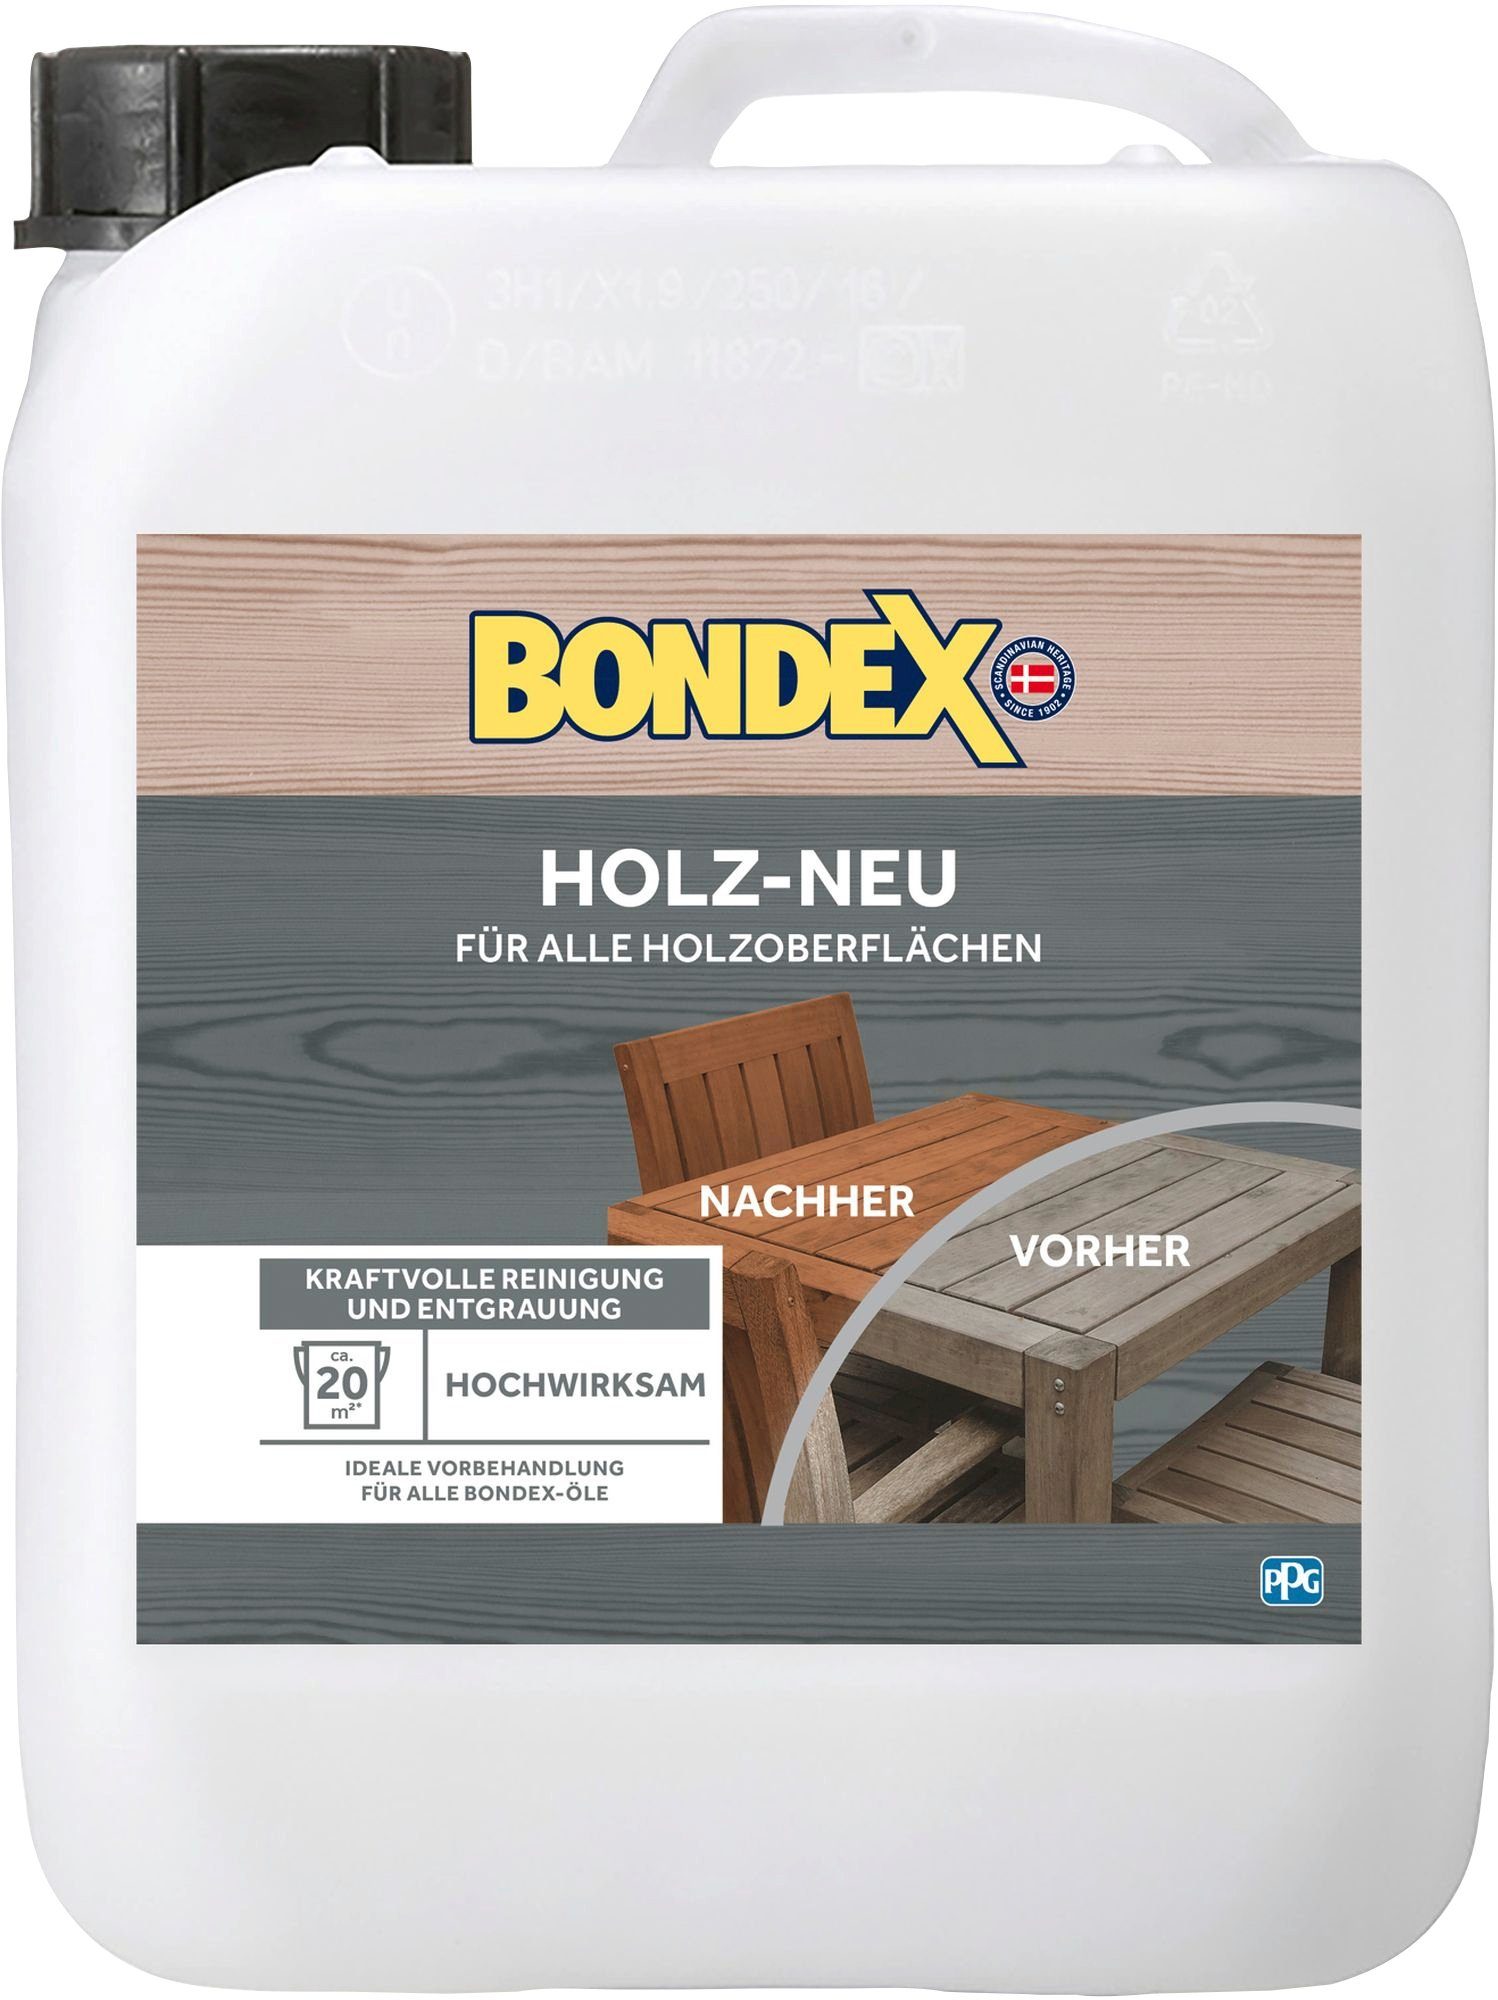 Bondex HOLZ-NEU Holzreiniger 2,5 (für alle l) farblos, Holzoberflächen